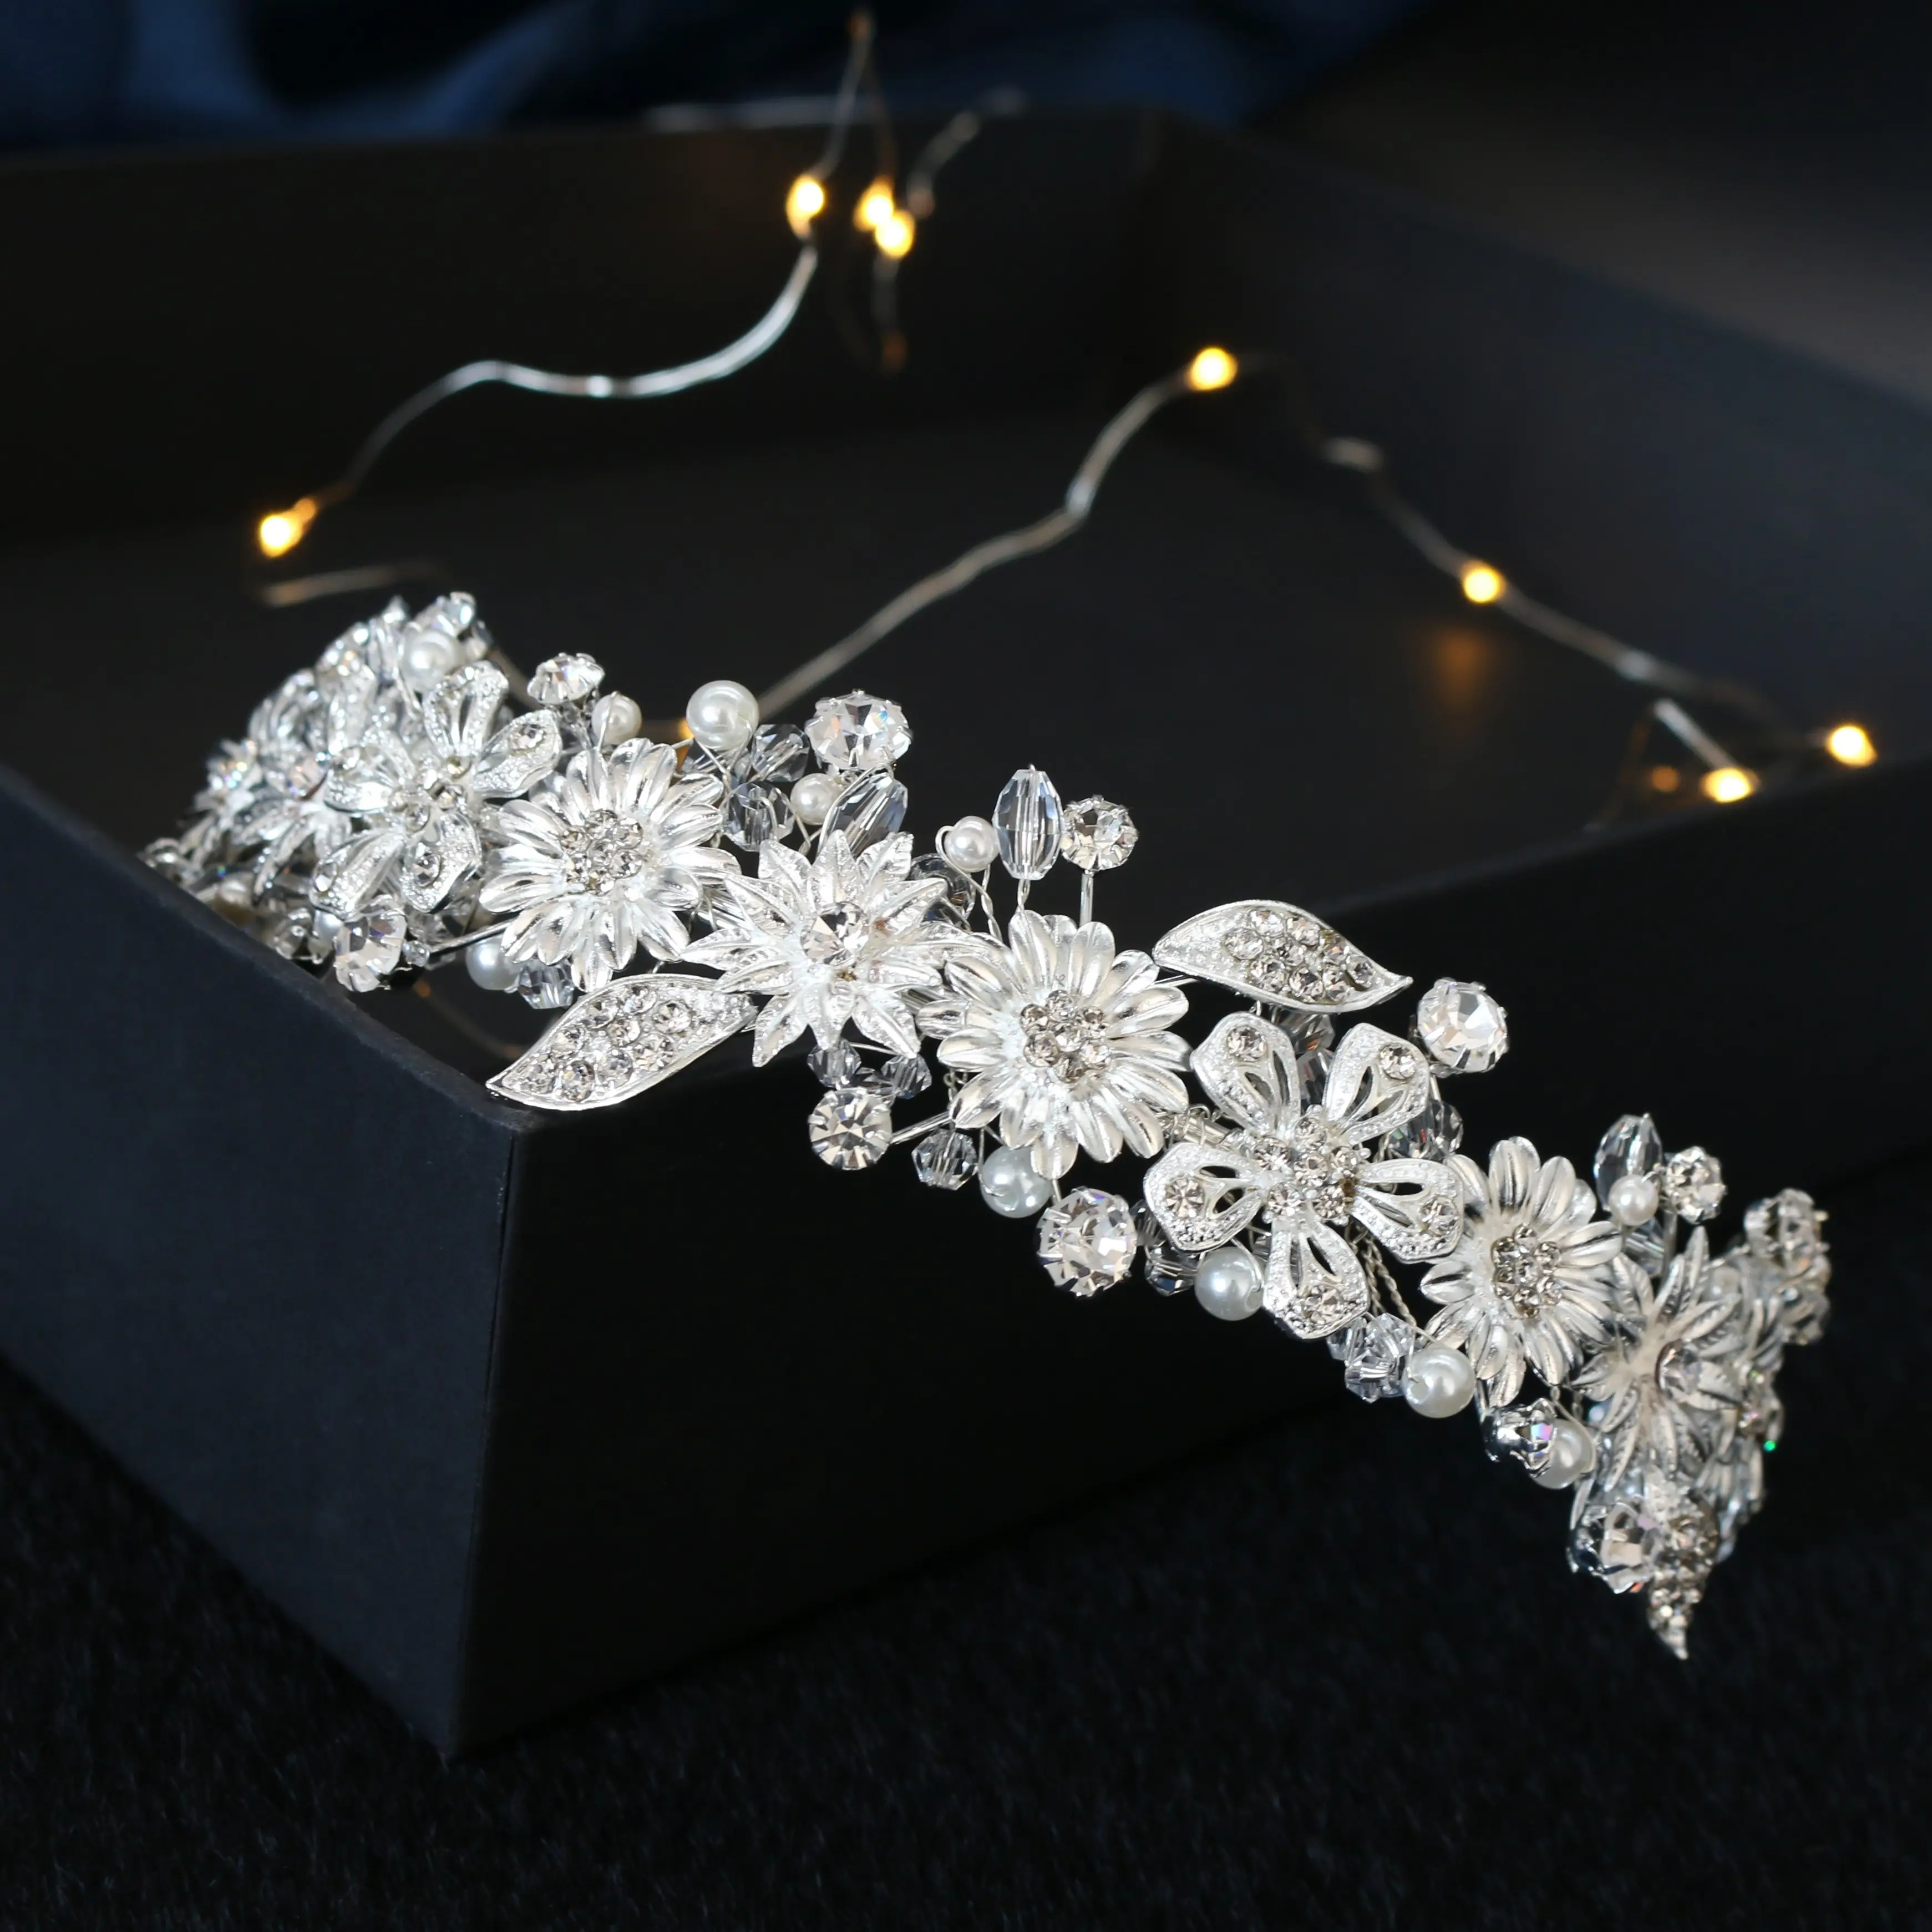 Handmade Sparkling Crystal Rhinestone Wedding Flower Tiara Coroa Headband Bridal Women Hair Accessories